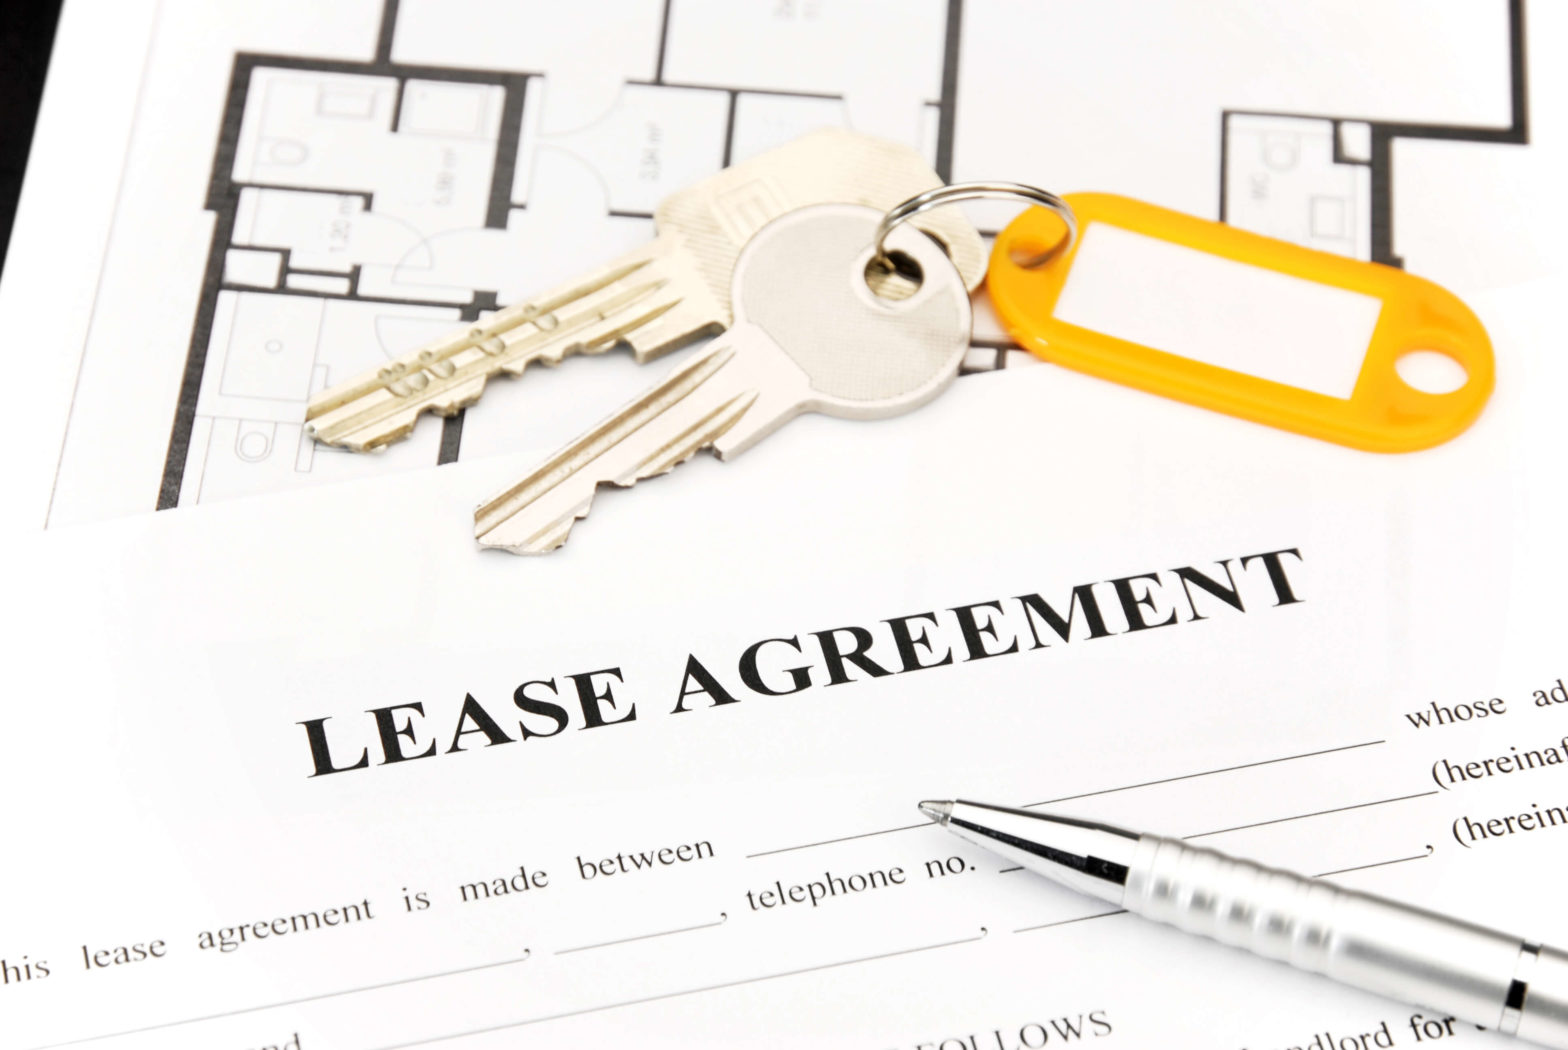 tenant discrimination liability insurance